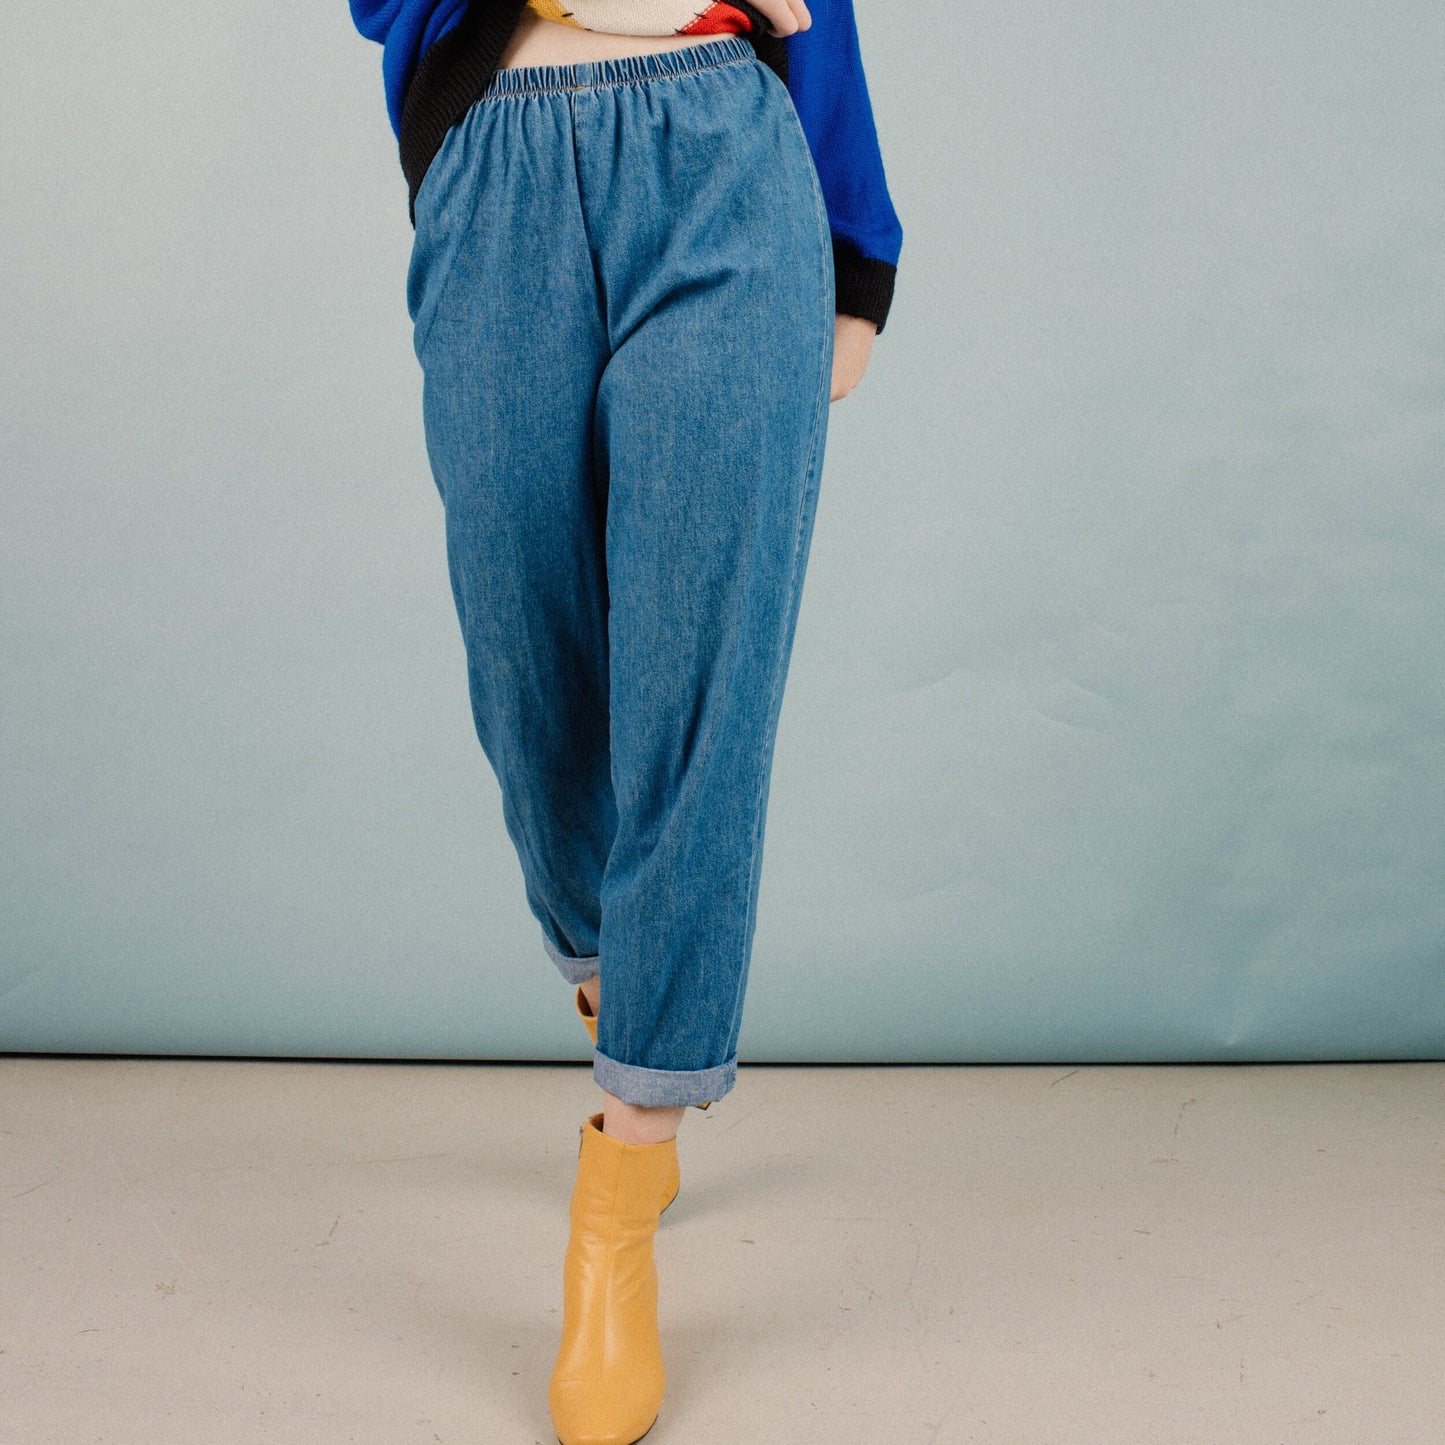 Vintage Blue Denim Elastic Waist Light Pants / S/M / worn out hipster mom jeans vintage 90s grunge denim perfect fit